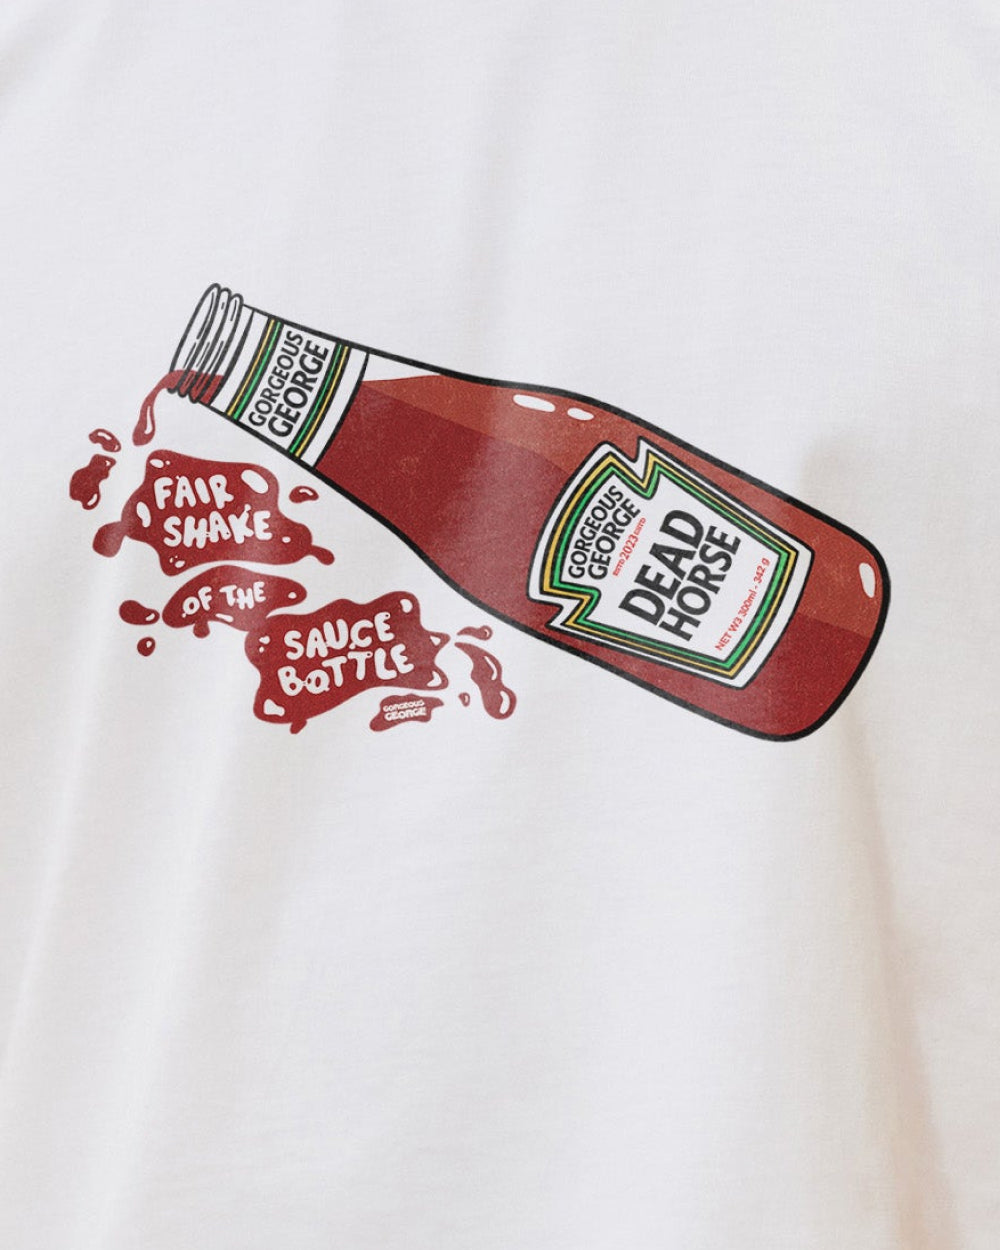 Fair Shake of the Sauce Bottle T-Shirt